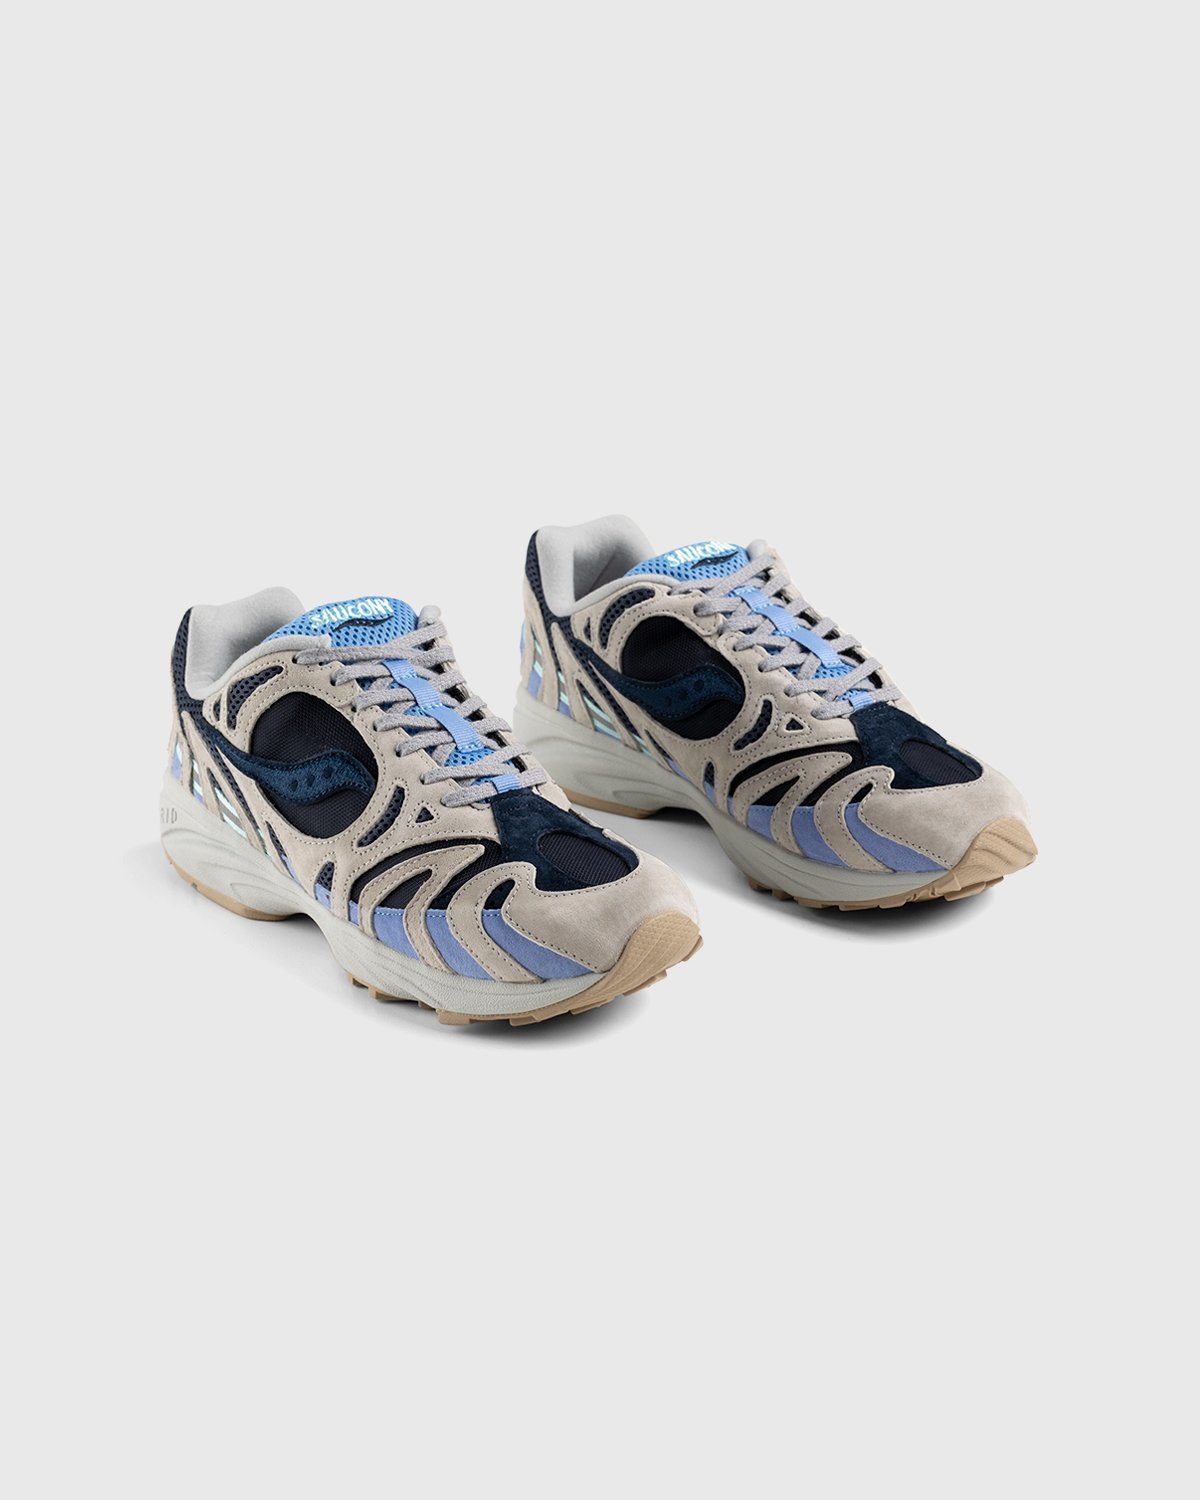 Saucony - Grid Azura 2000 Grey - Footwear - Blue - Image 4